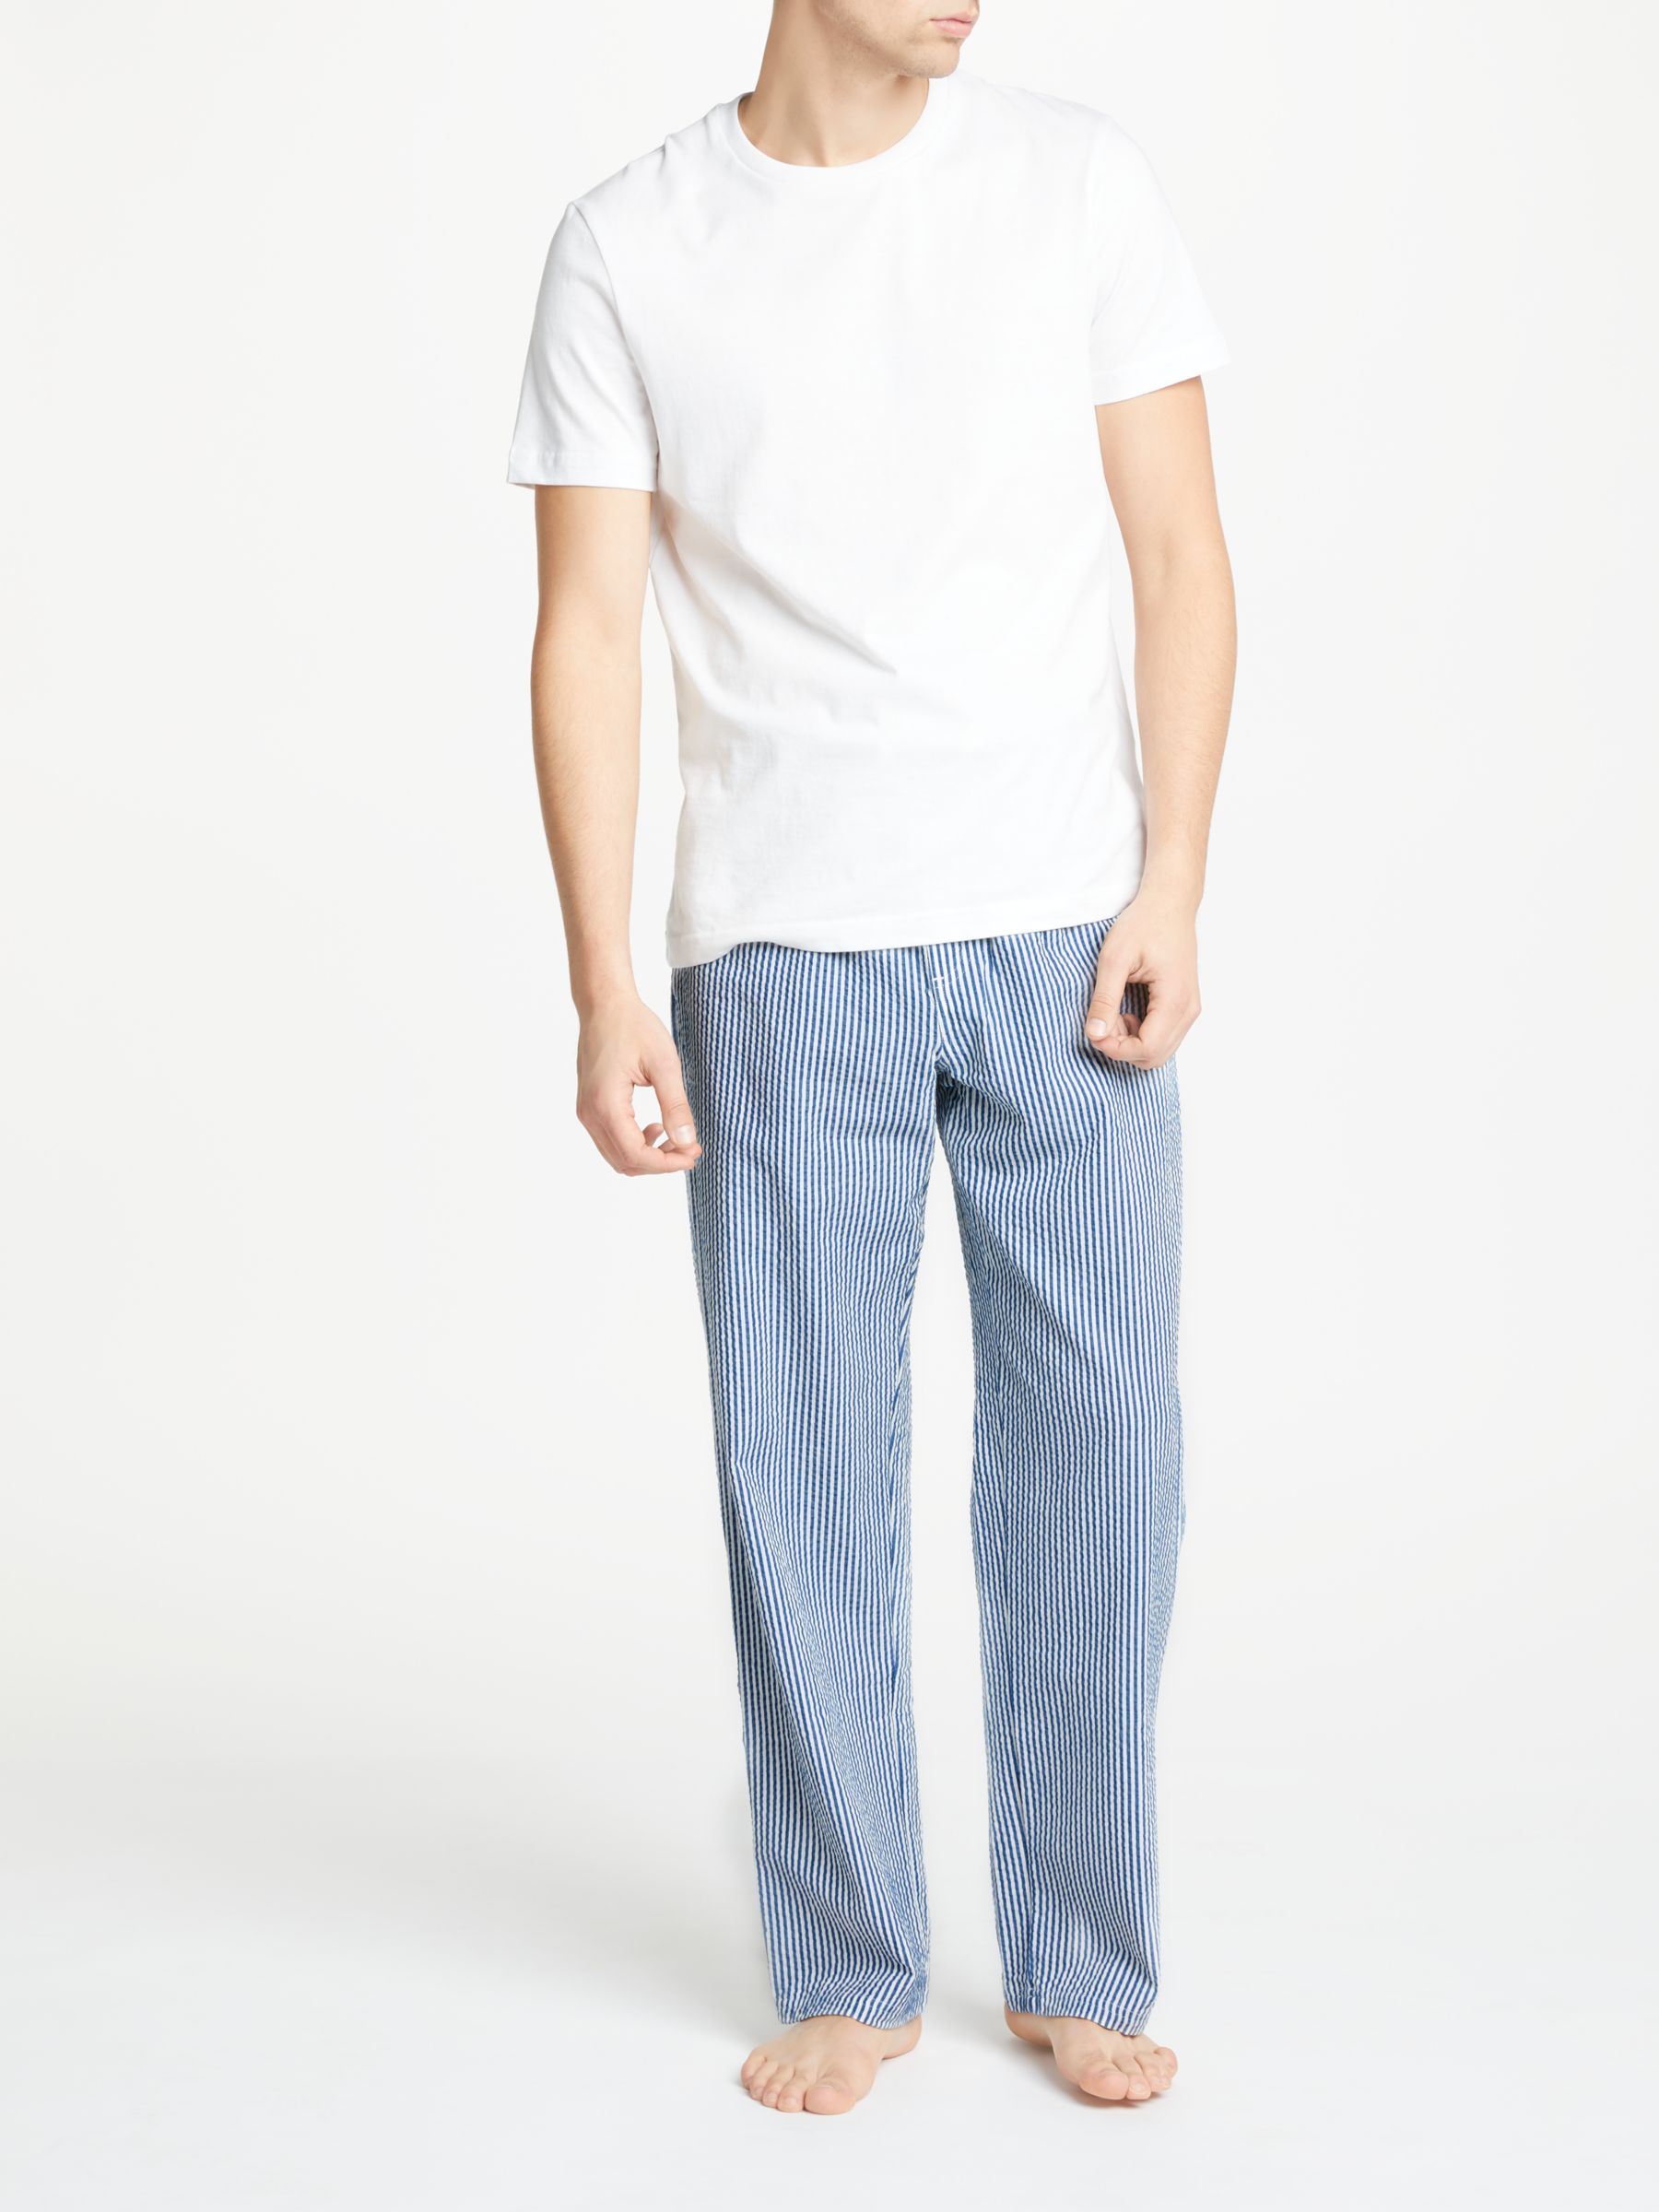 John Lewis & Partners Stripe Seersucker Cotton Lounge Pants, White/Blue, S